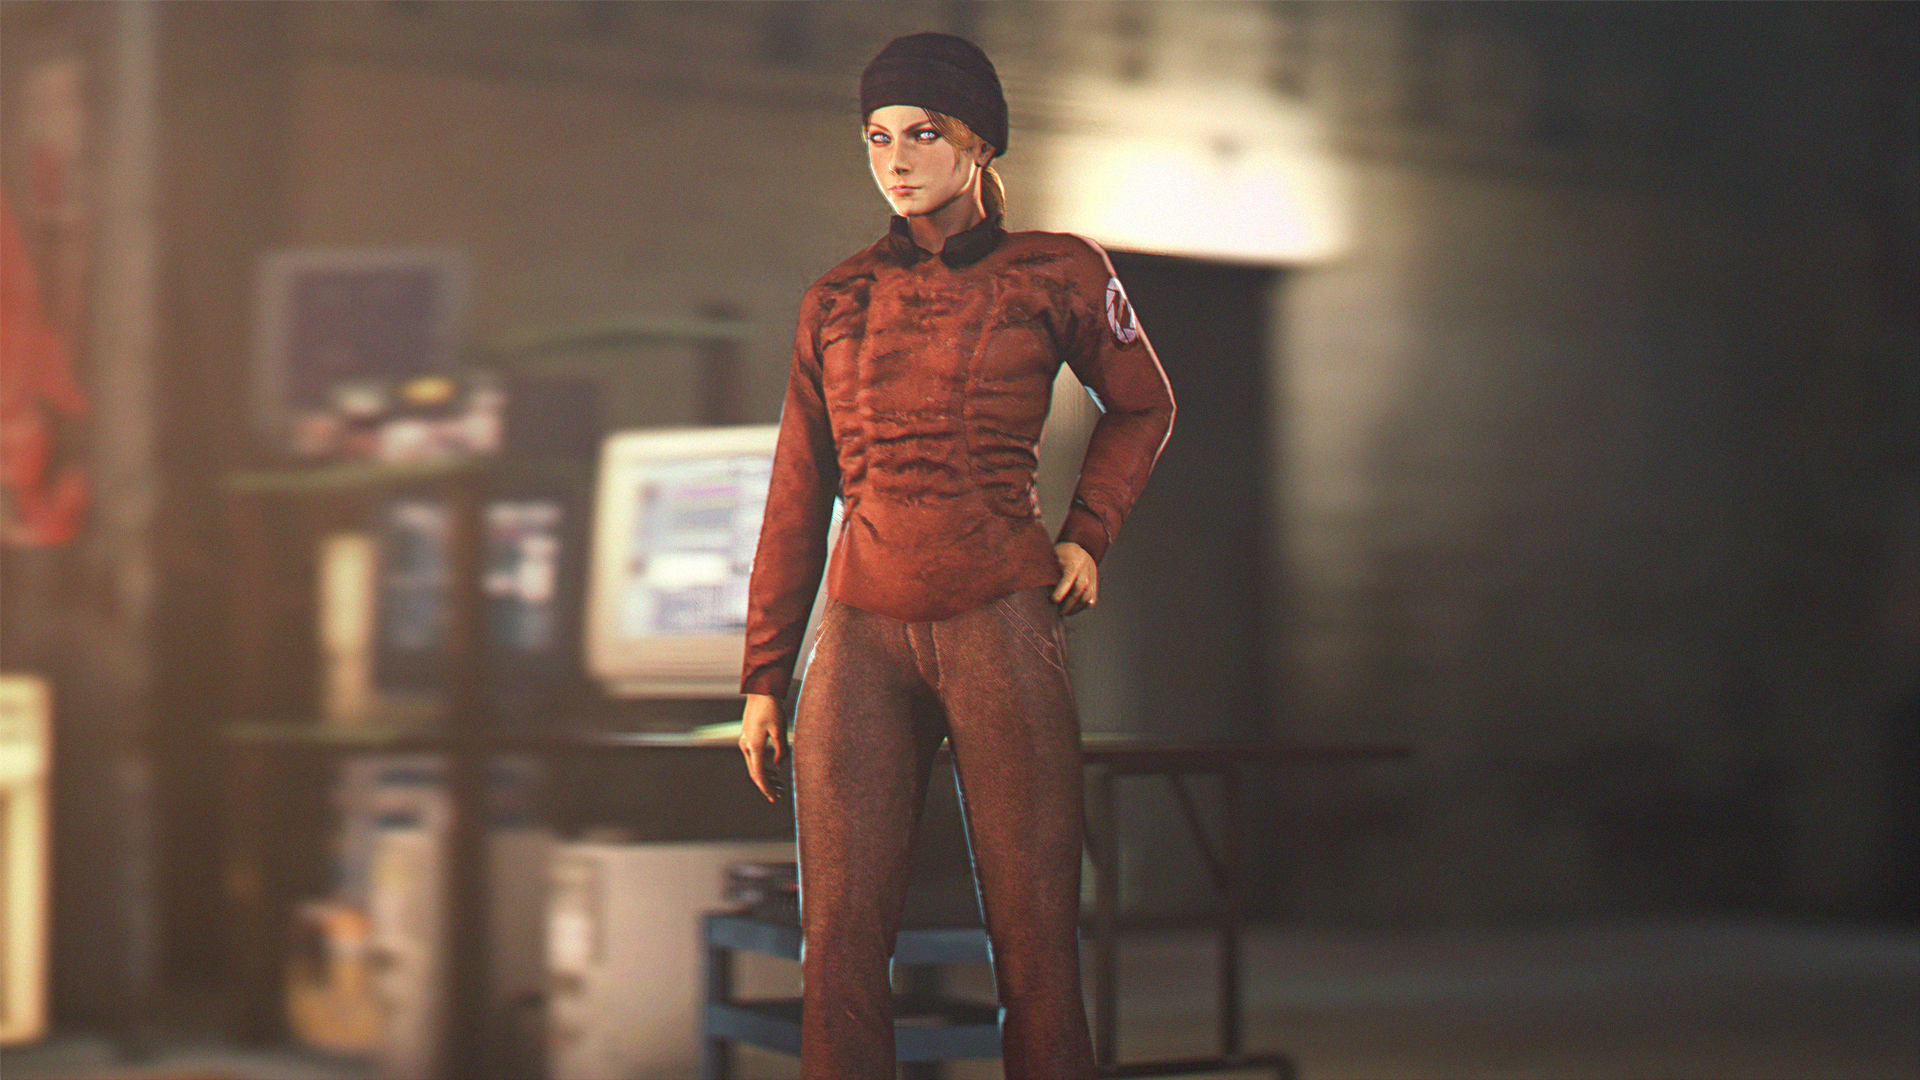 Natalie Denout image - Borealis: The Last Man Standing mod for Half-Life 2.